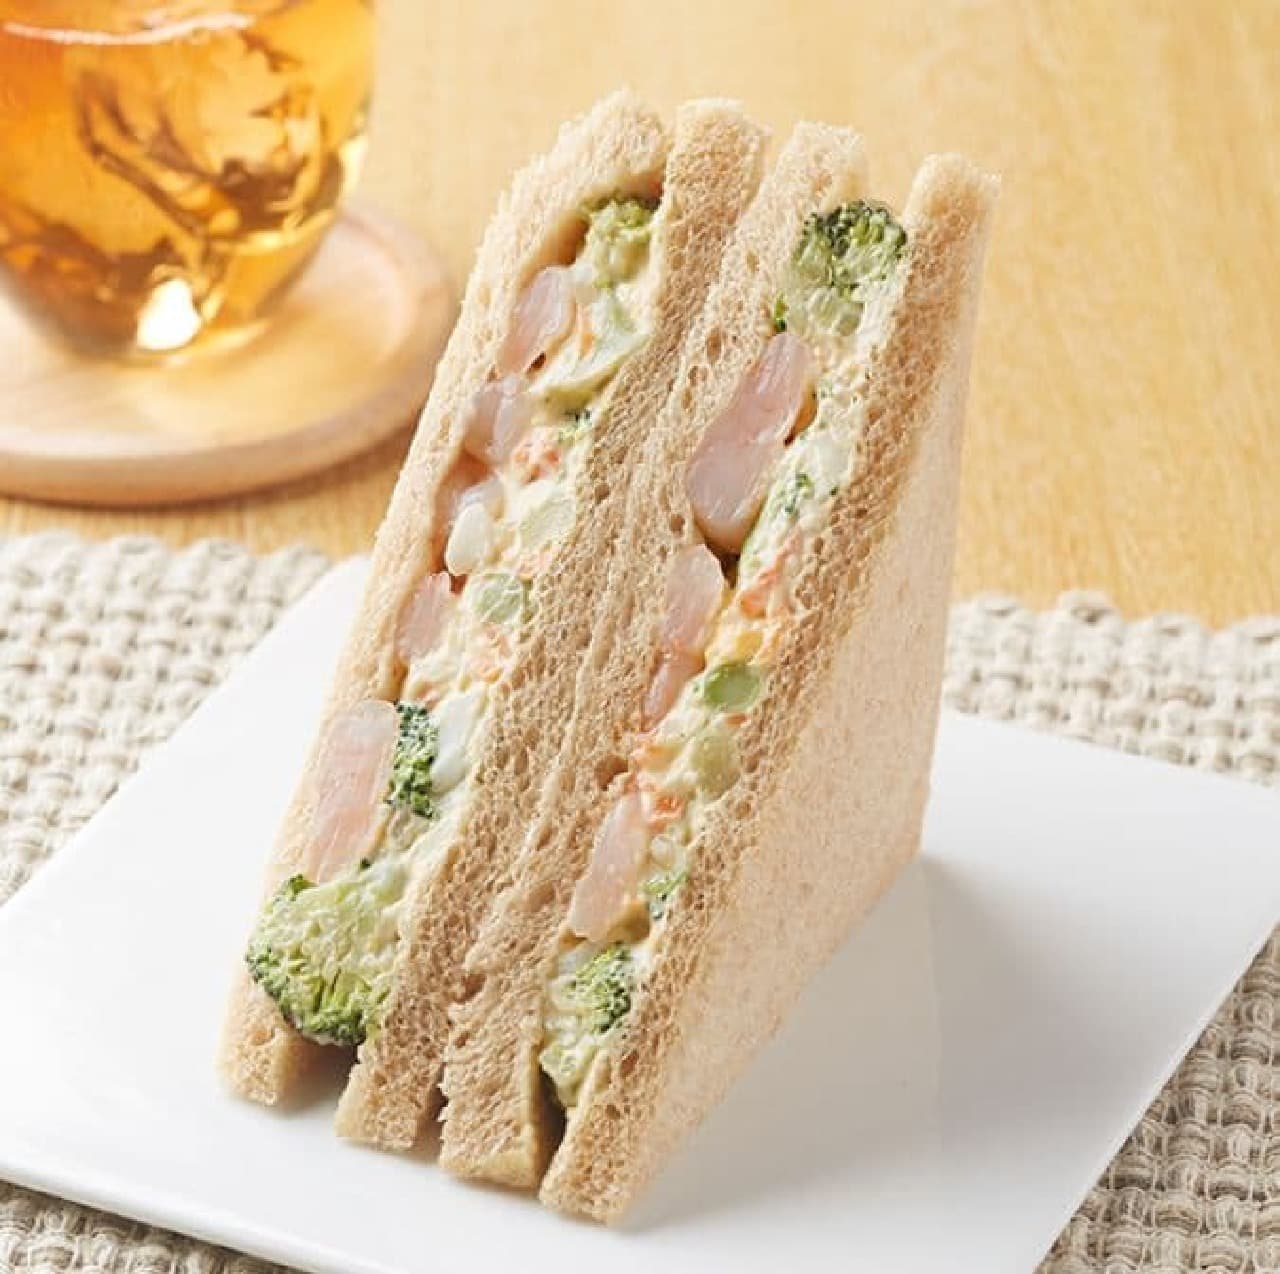 FamilyMart "Whole Grain Sandwich - Shrimp and Broccoli Salad Sandwich"